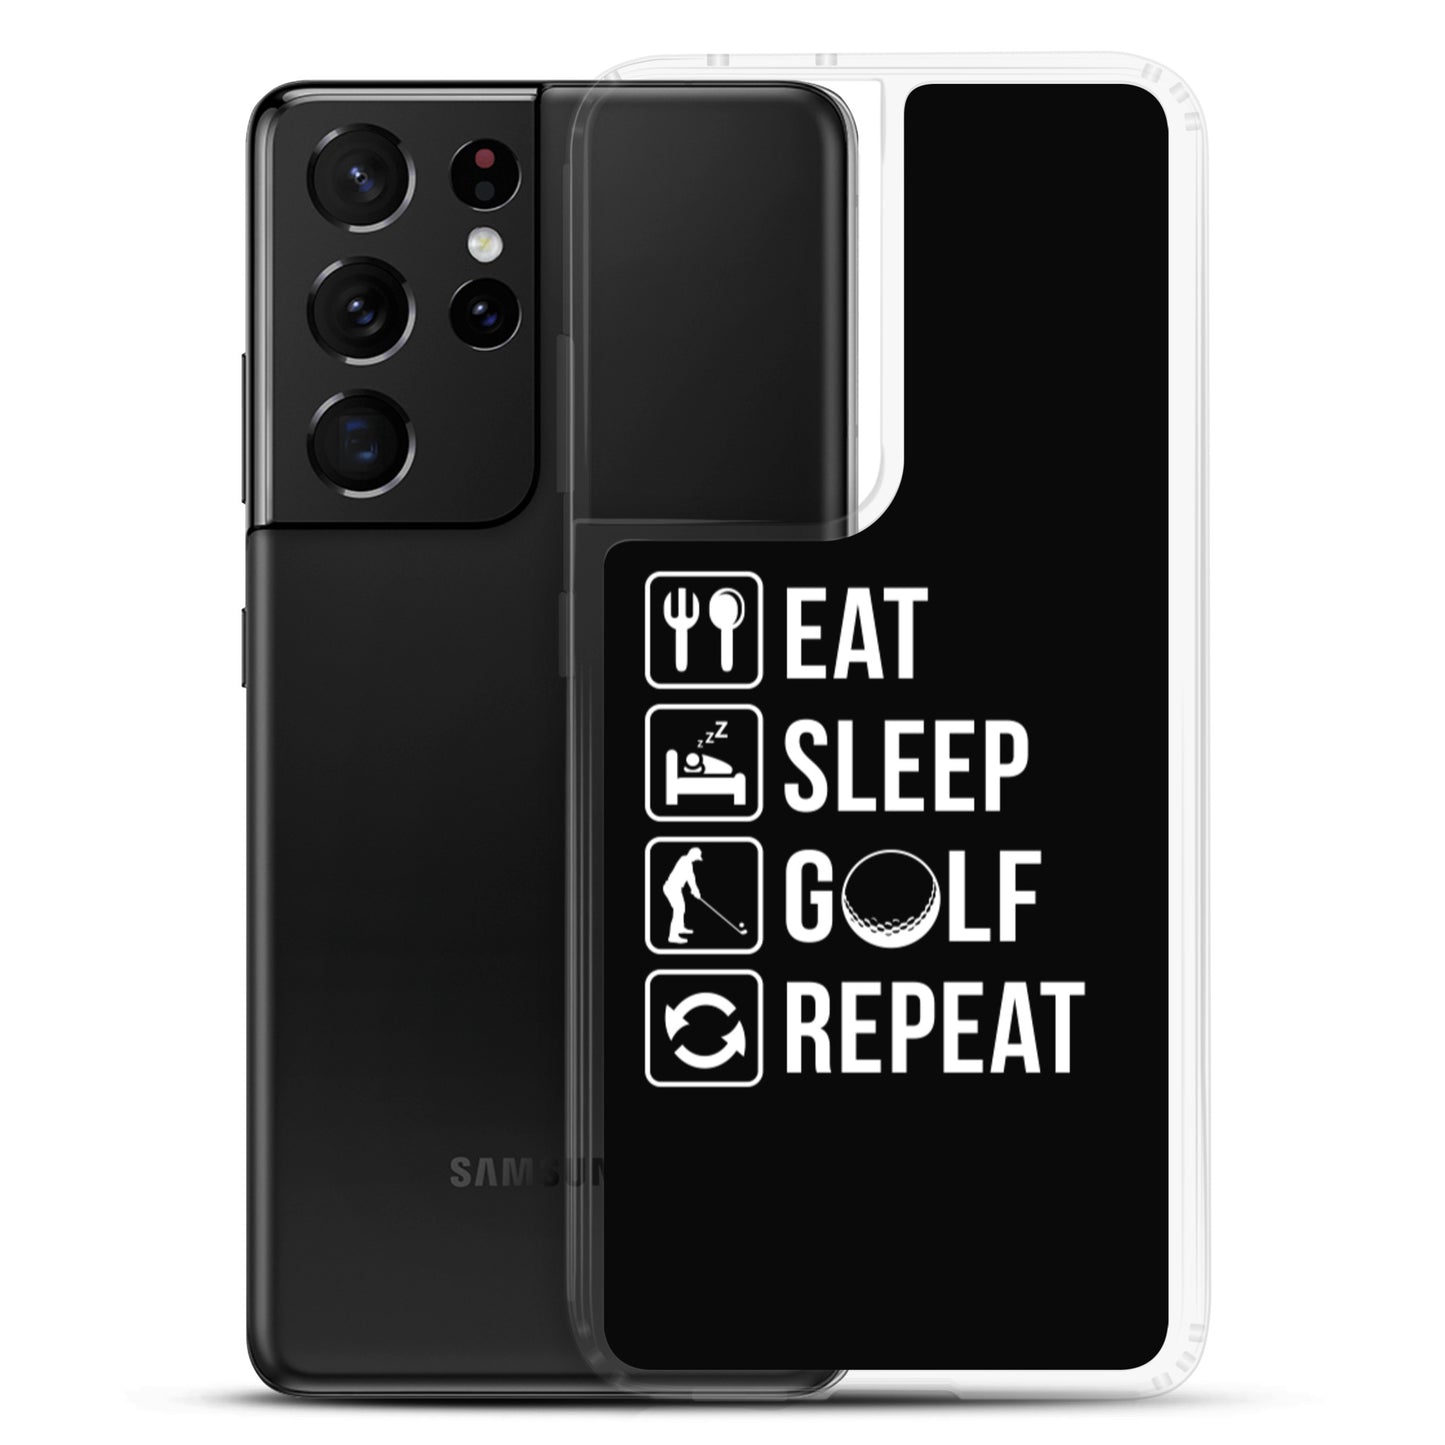 Eat, Sleep, Golf, Repeat Samsung Case